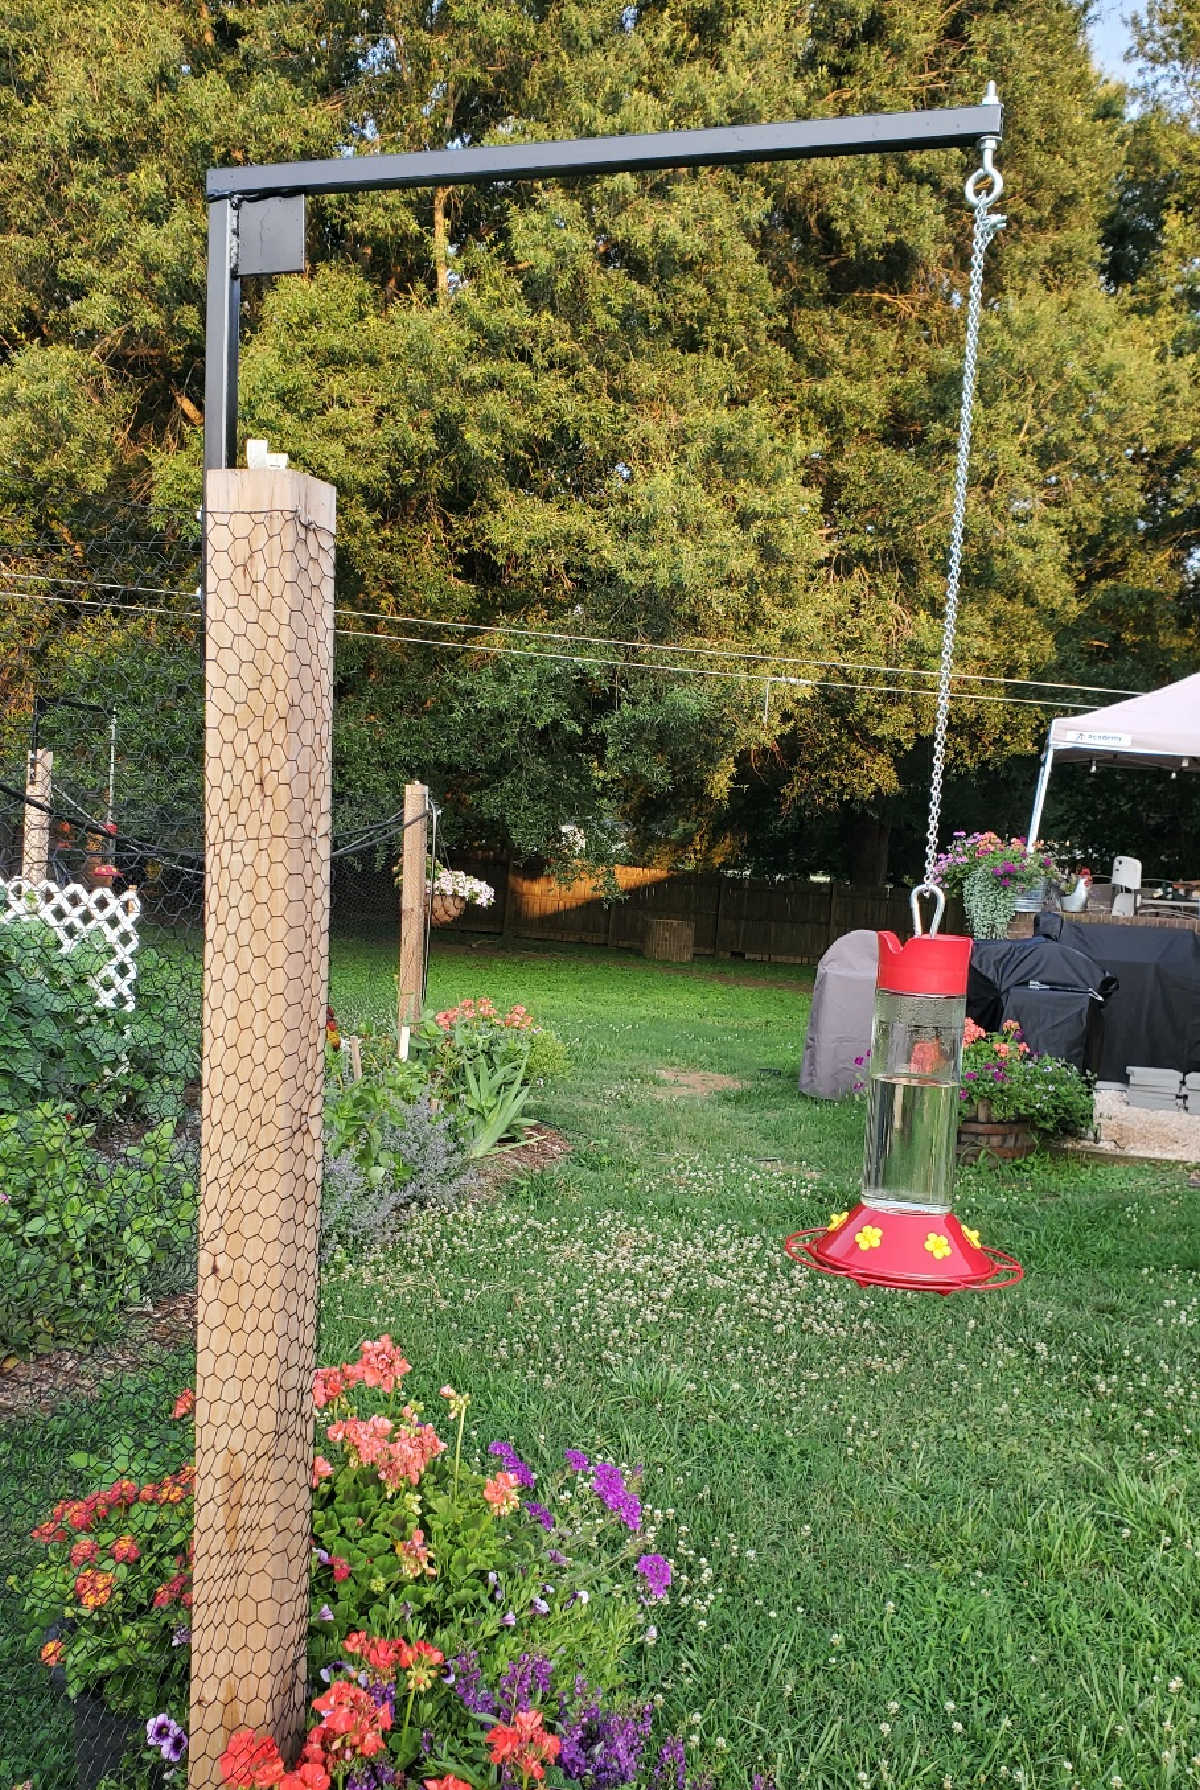 Hummingbird feeder hung off metal hanger on vegetable garden fence.